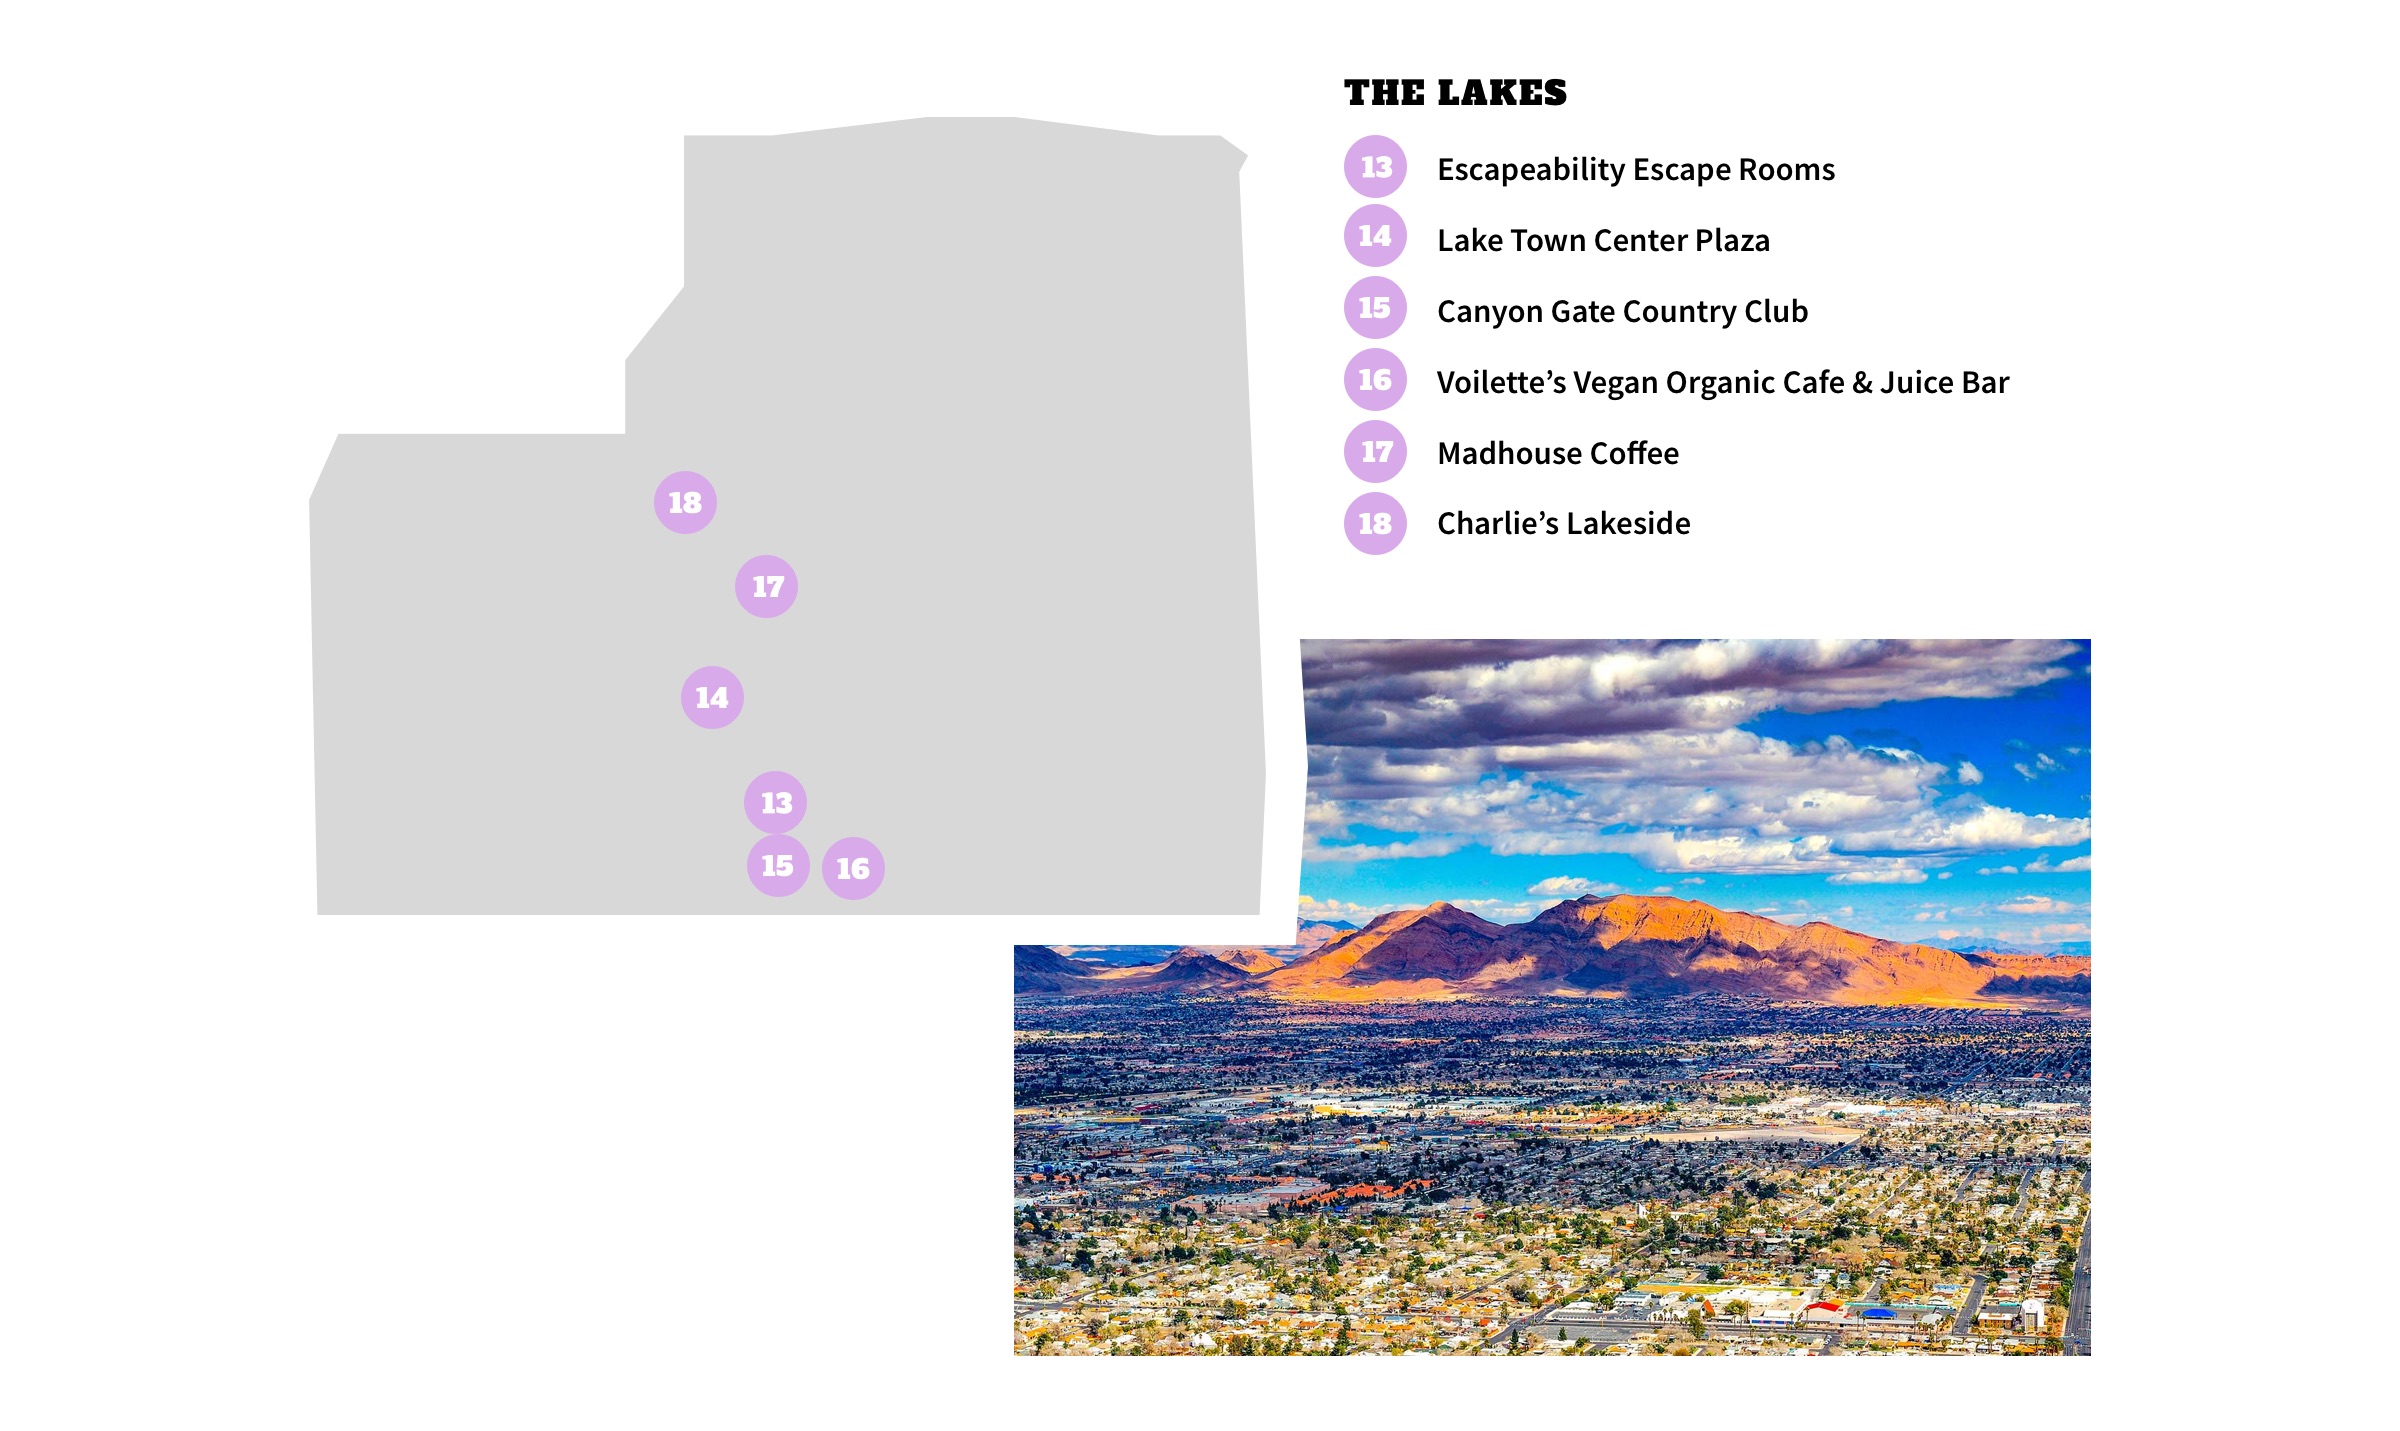 The Lakes Neighborhood Guide - Las Vegas